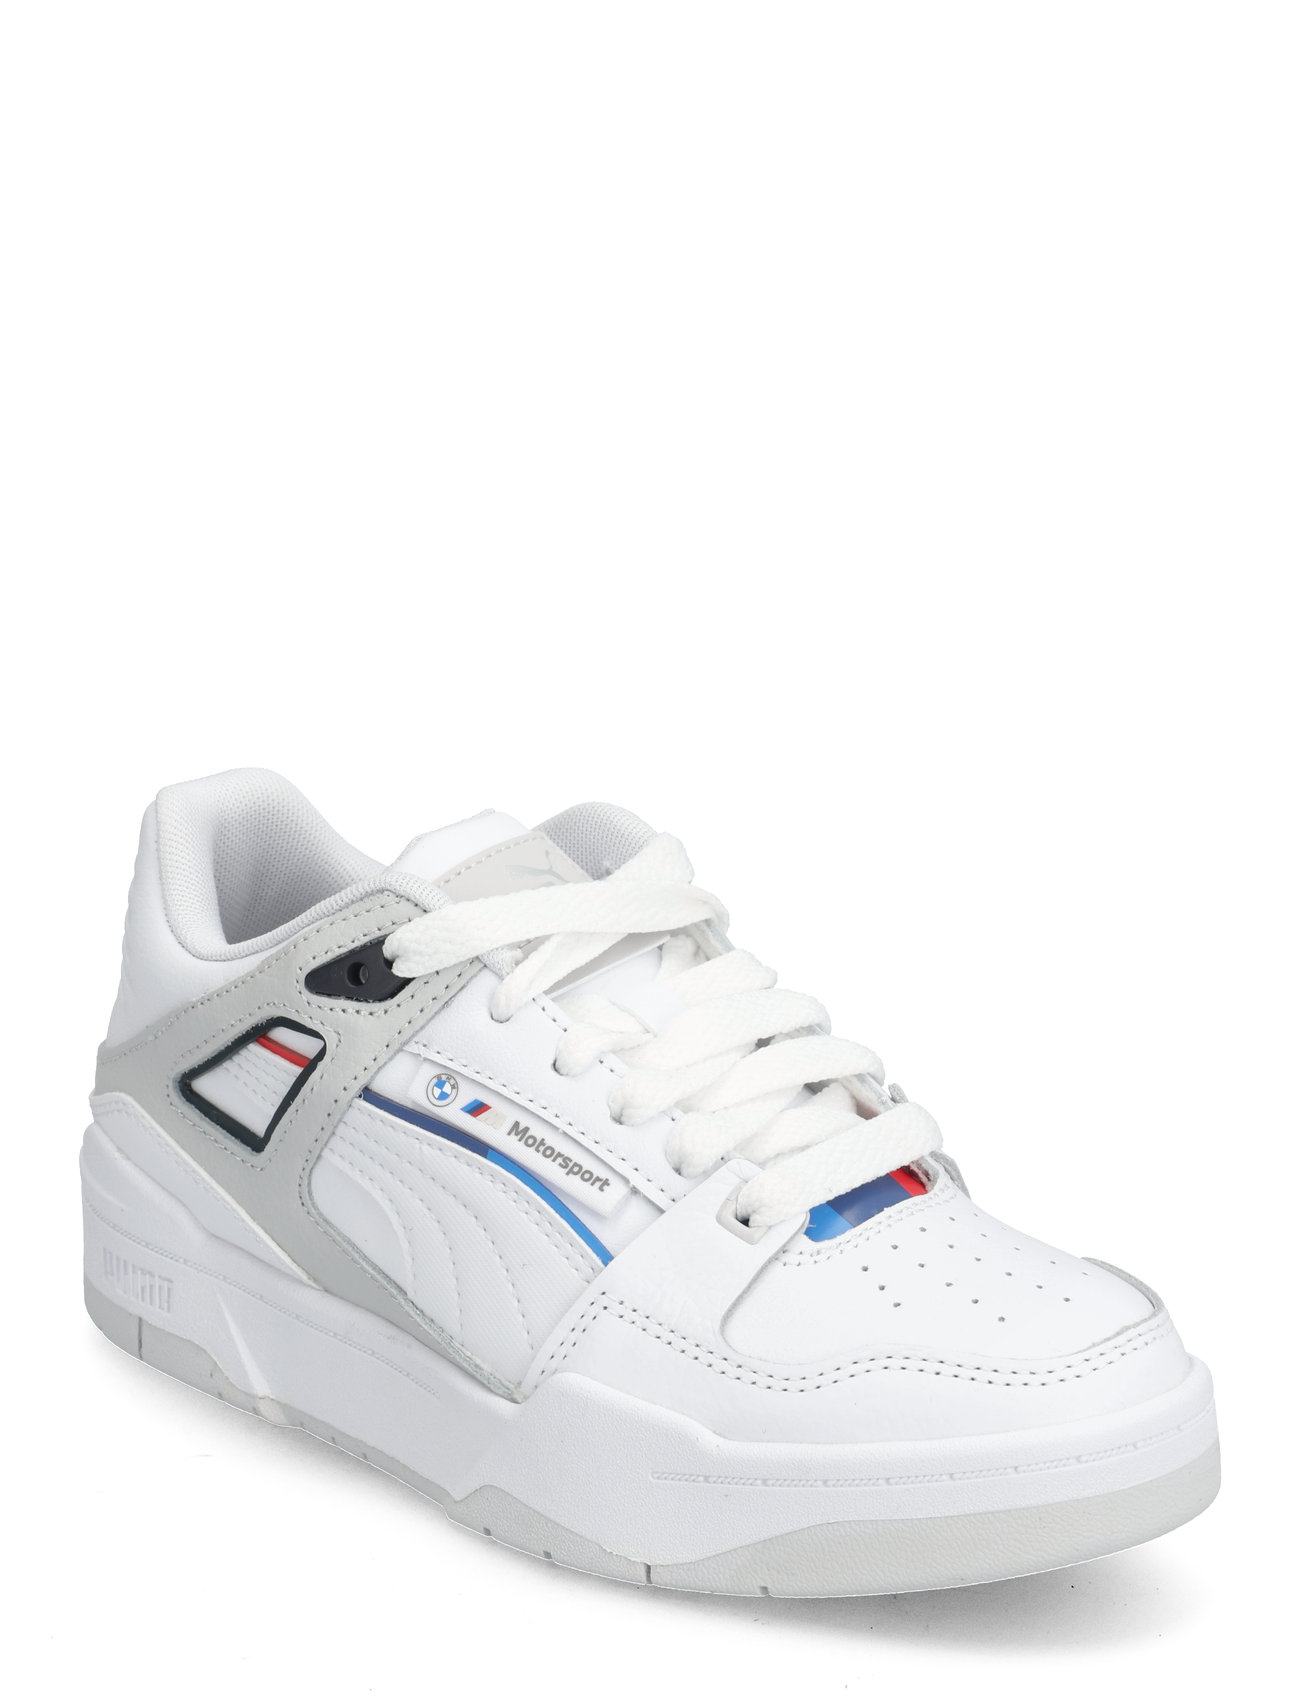 Bmw Mms Slipstream Sport Sneakers Low-top Sneakers White PUMA Motorsport